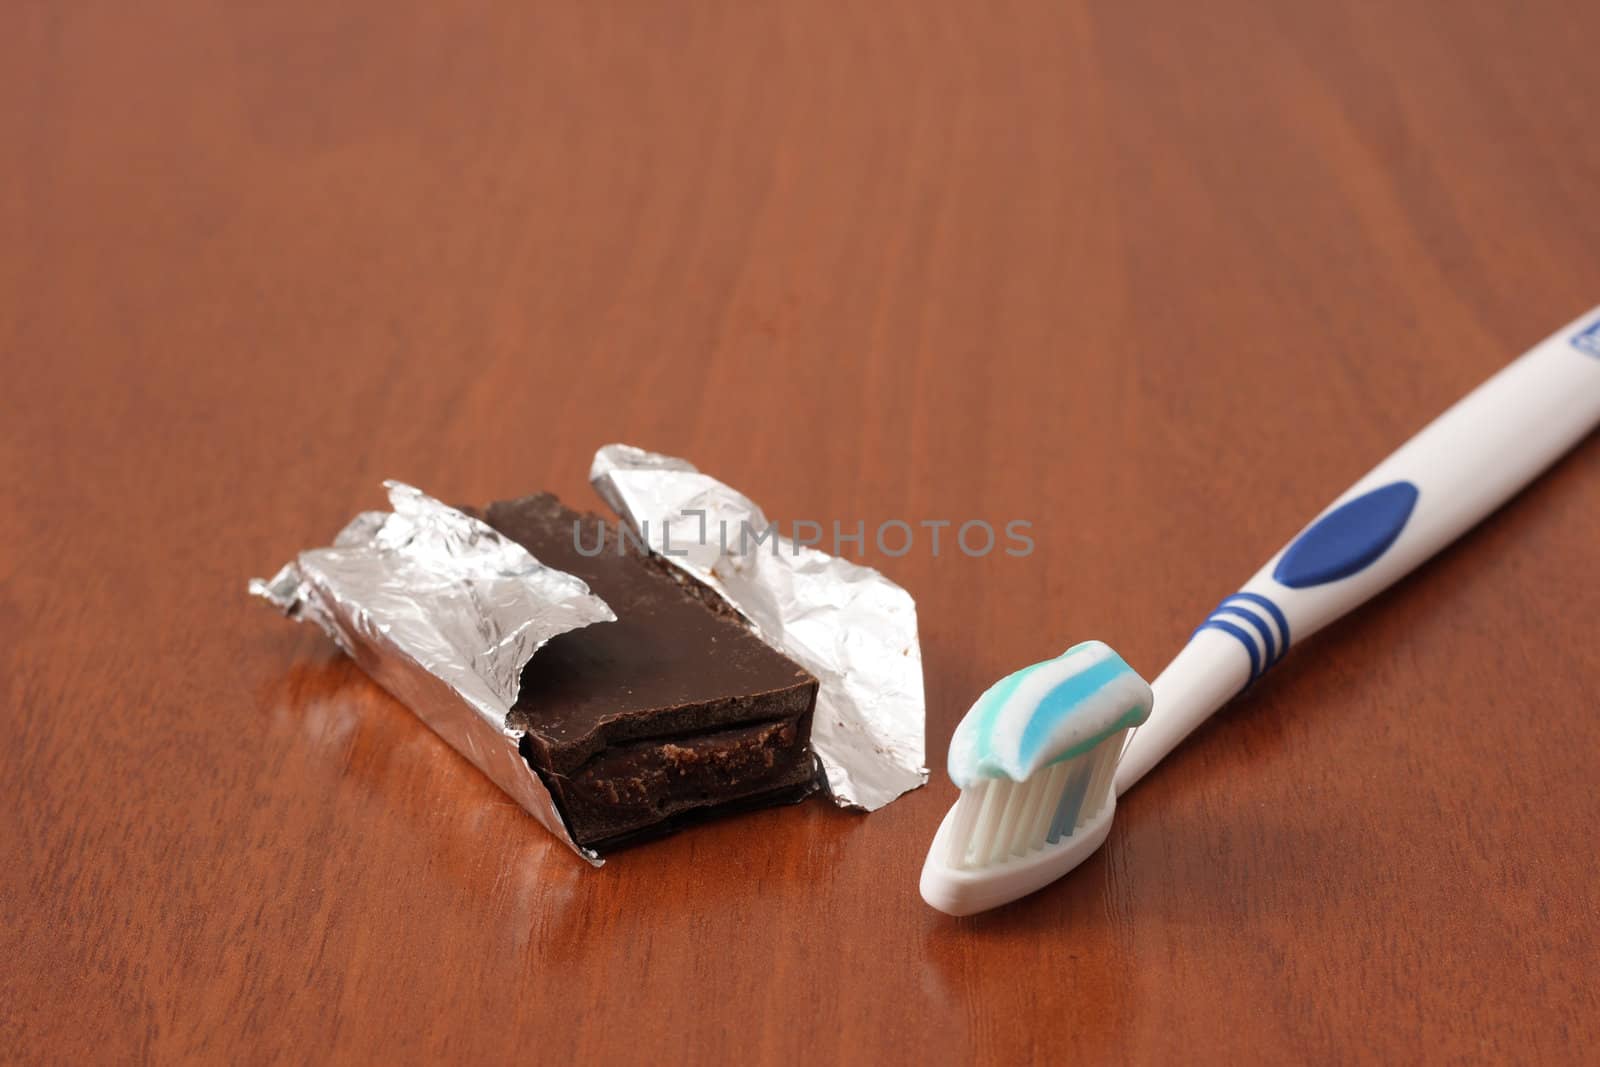 tooth brush next to chocolate